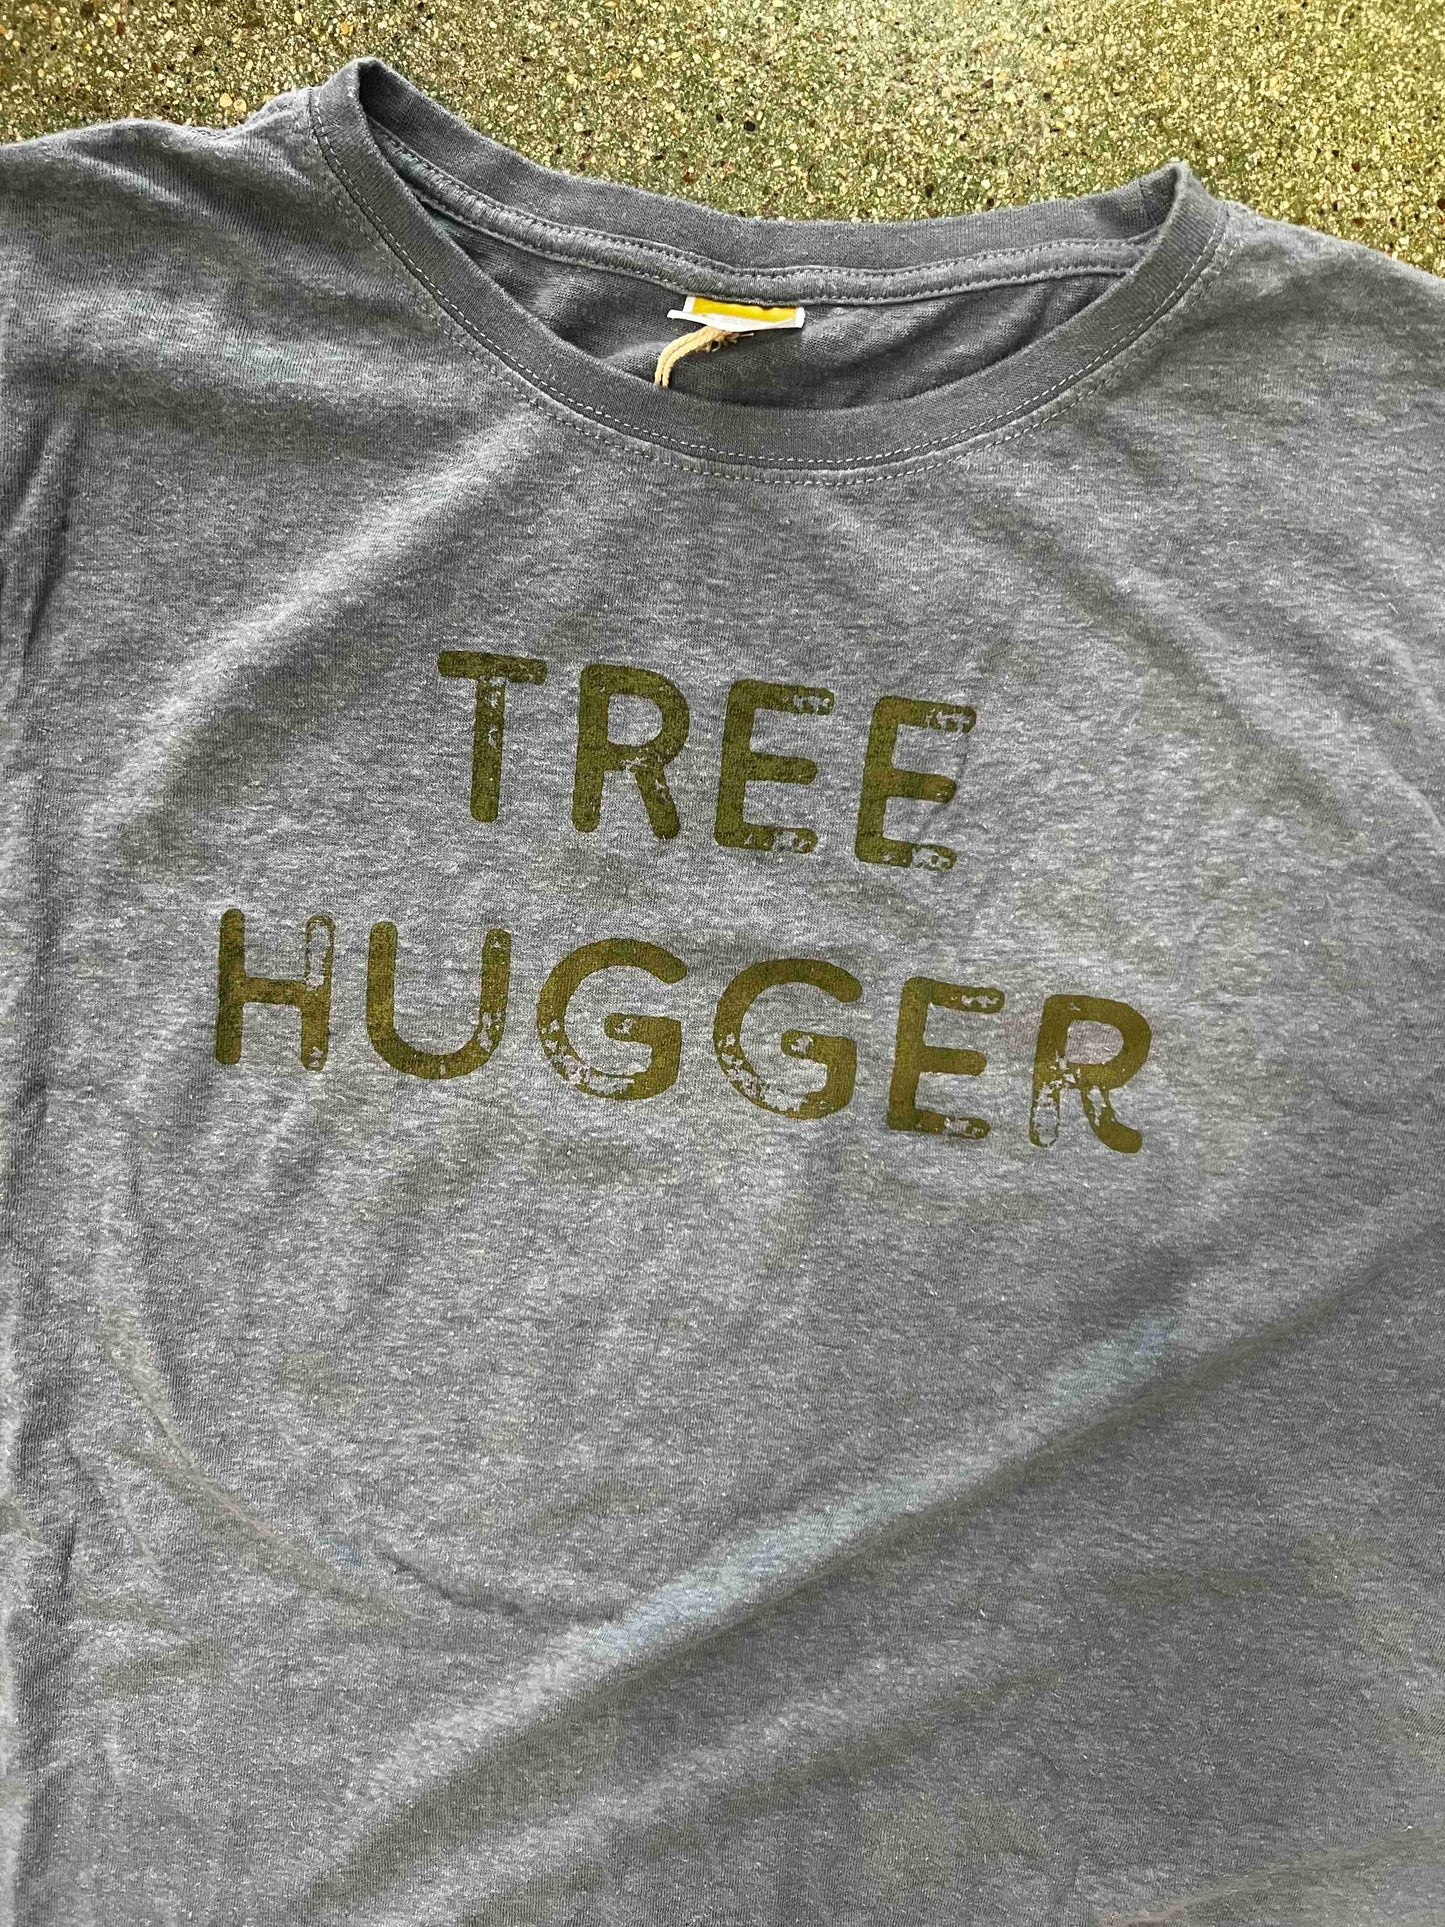 "Tree Hugger" Santa Barbara Hives T-shirt